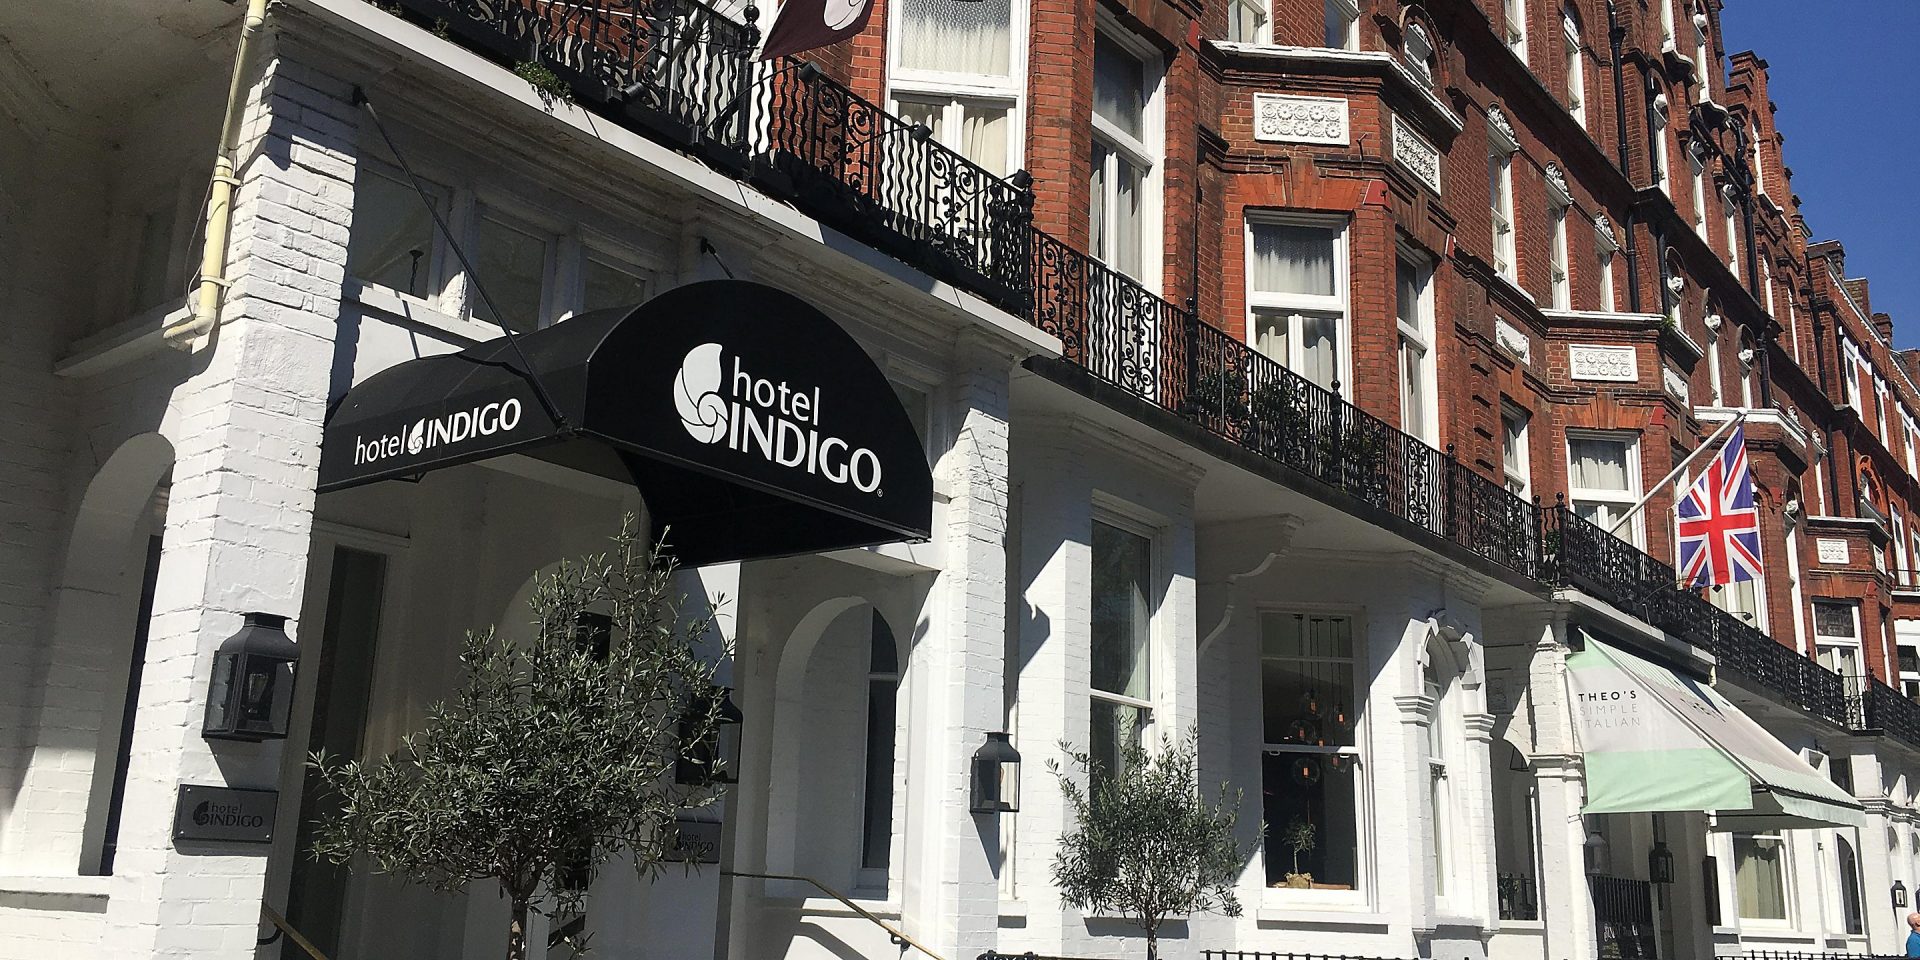 Hotel Indigo London 5484309088 2x1